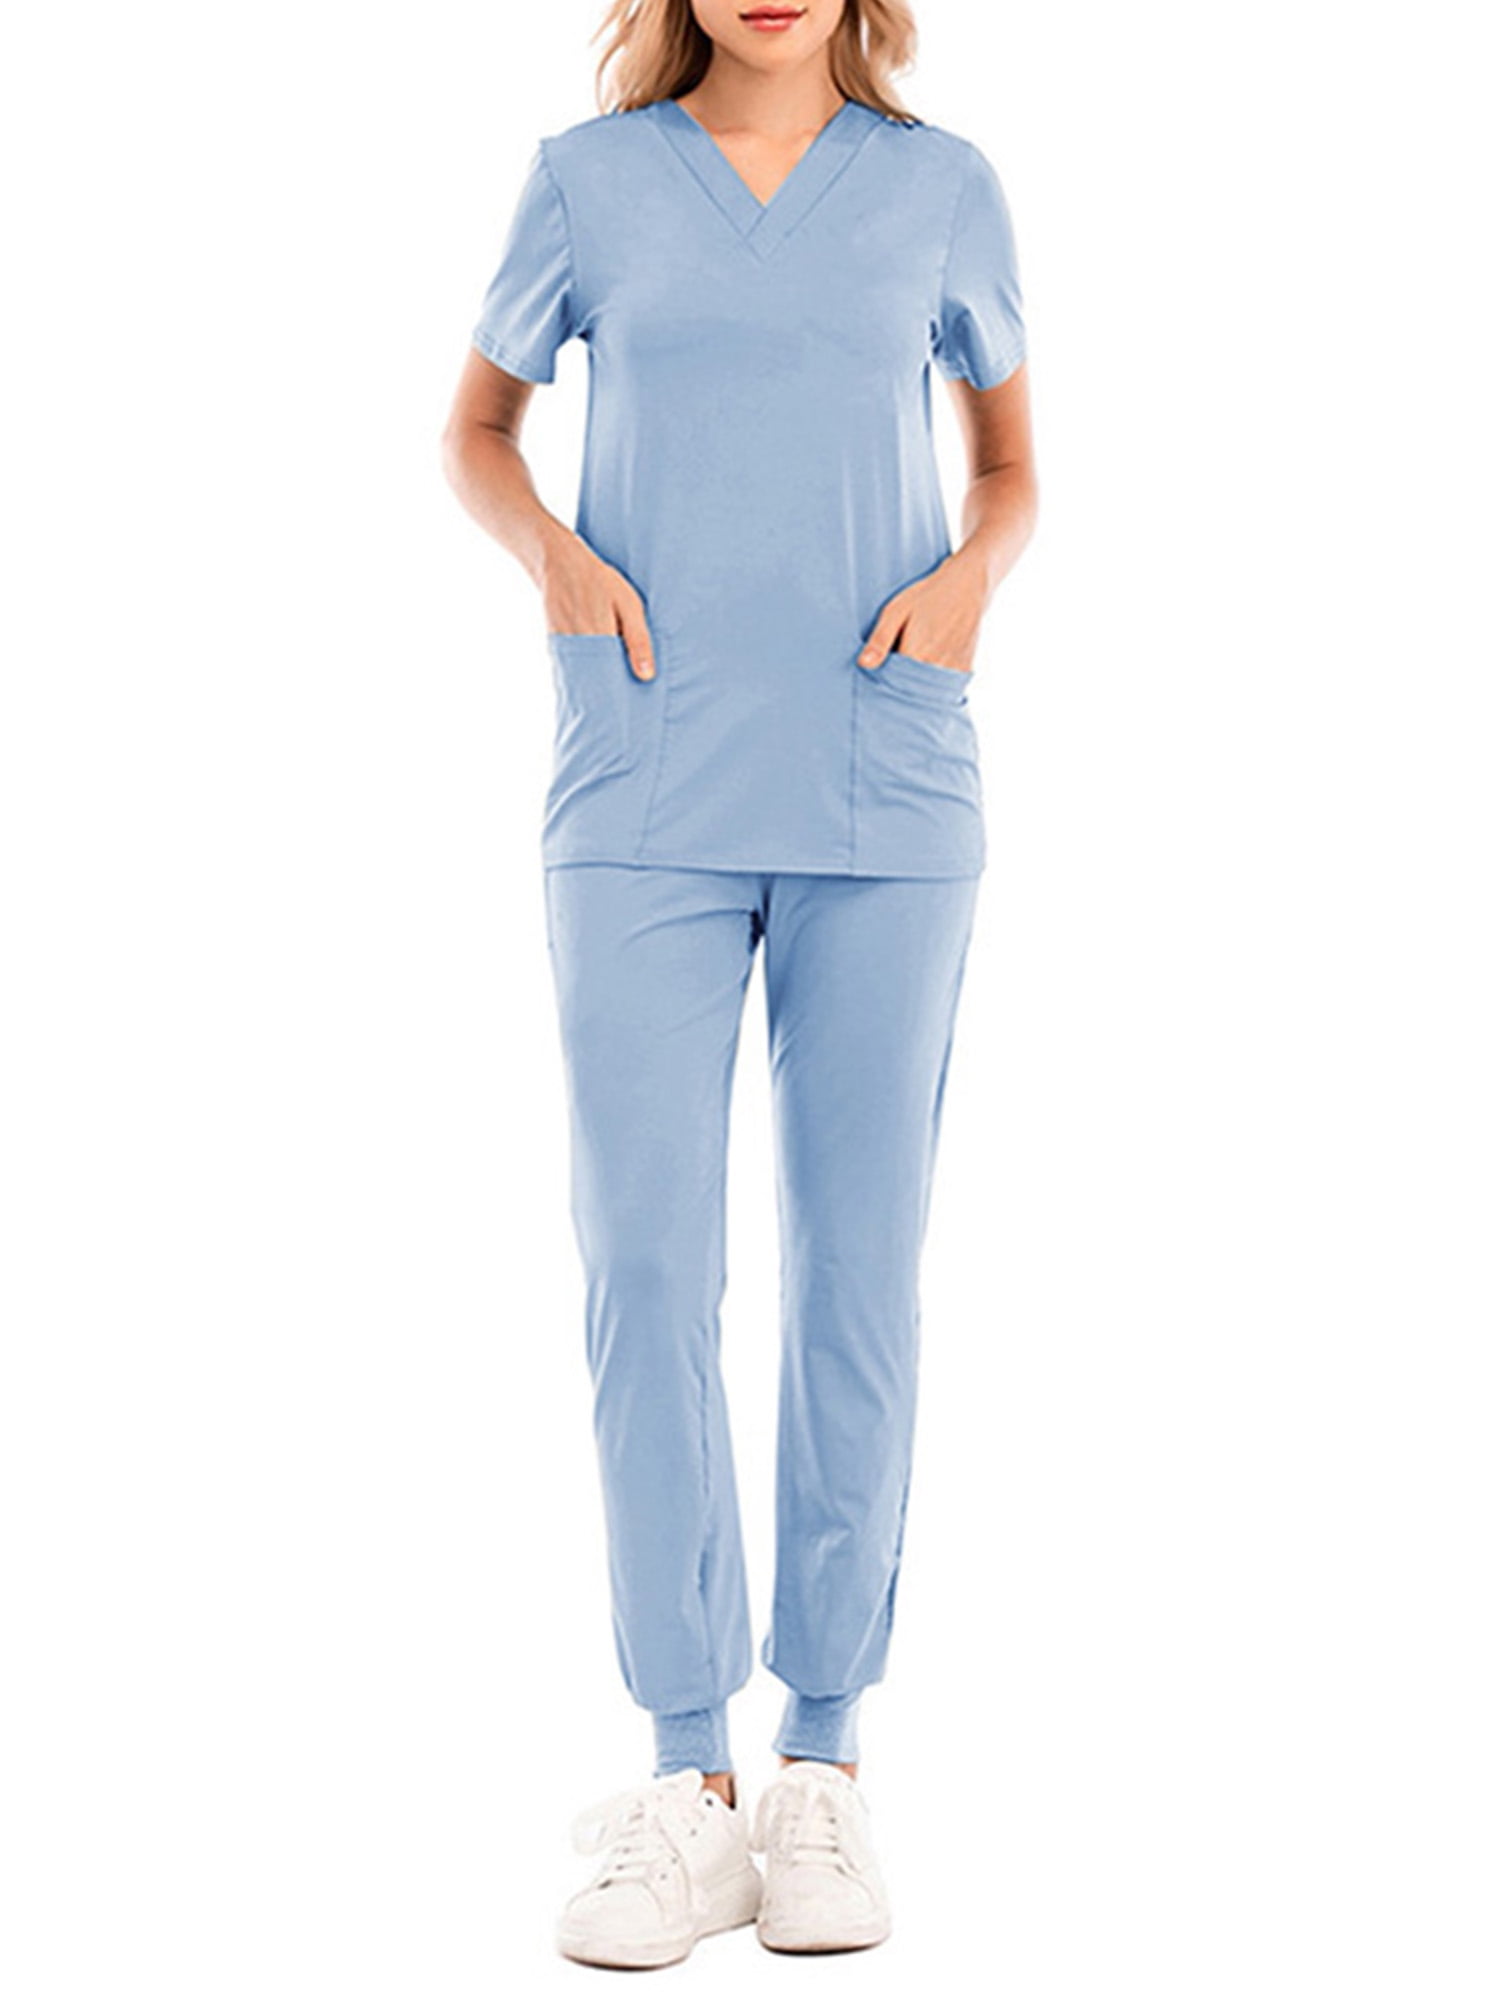 Solid Color Top+pants Short Sleeve Women Nurse Scrubs